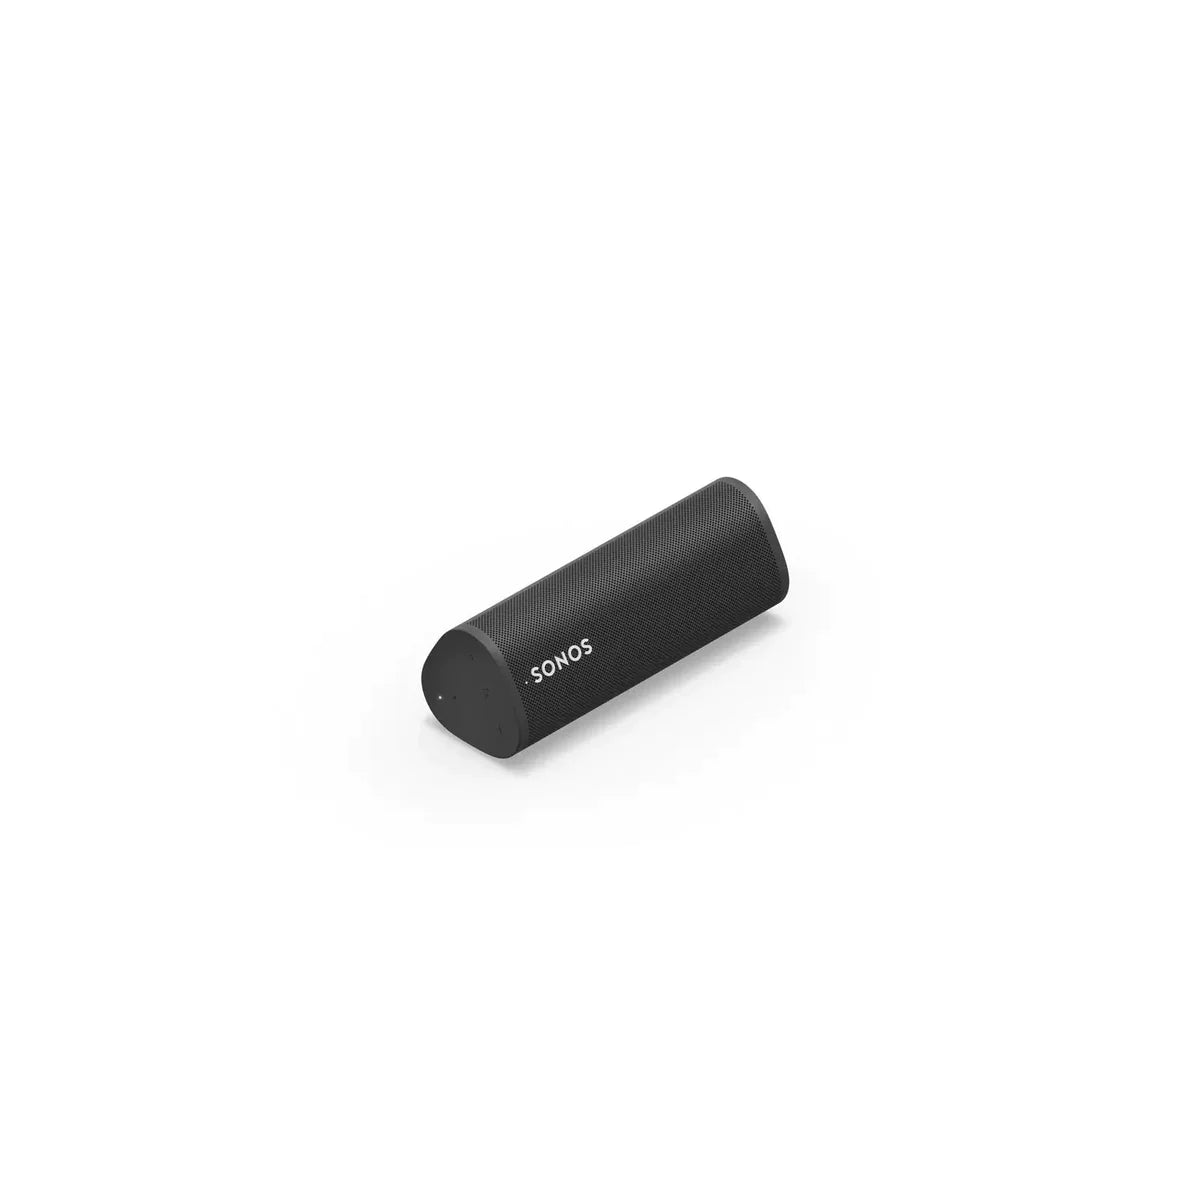 Sonos Roam Smart Speaker with Voice Control - Black - Refurbished Pristine